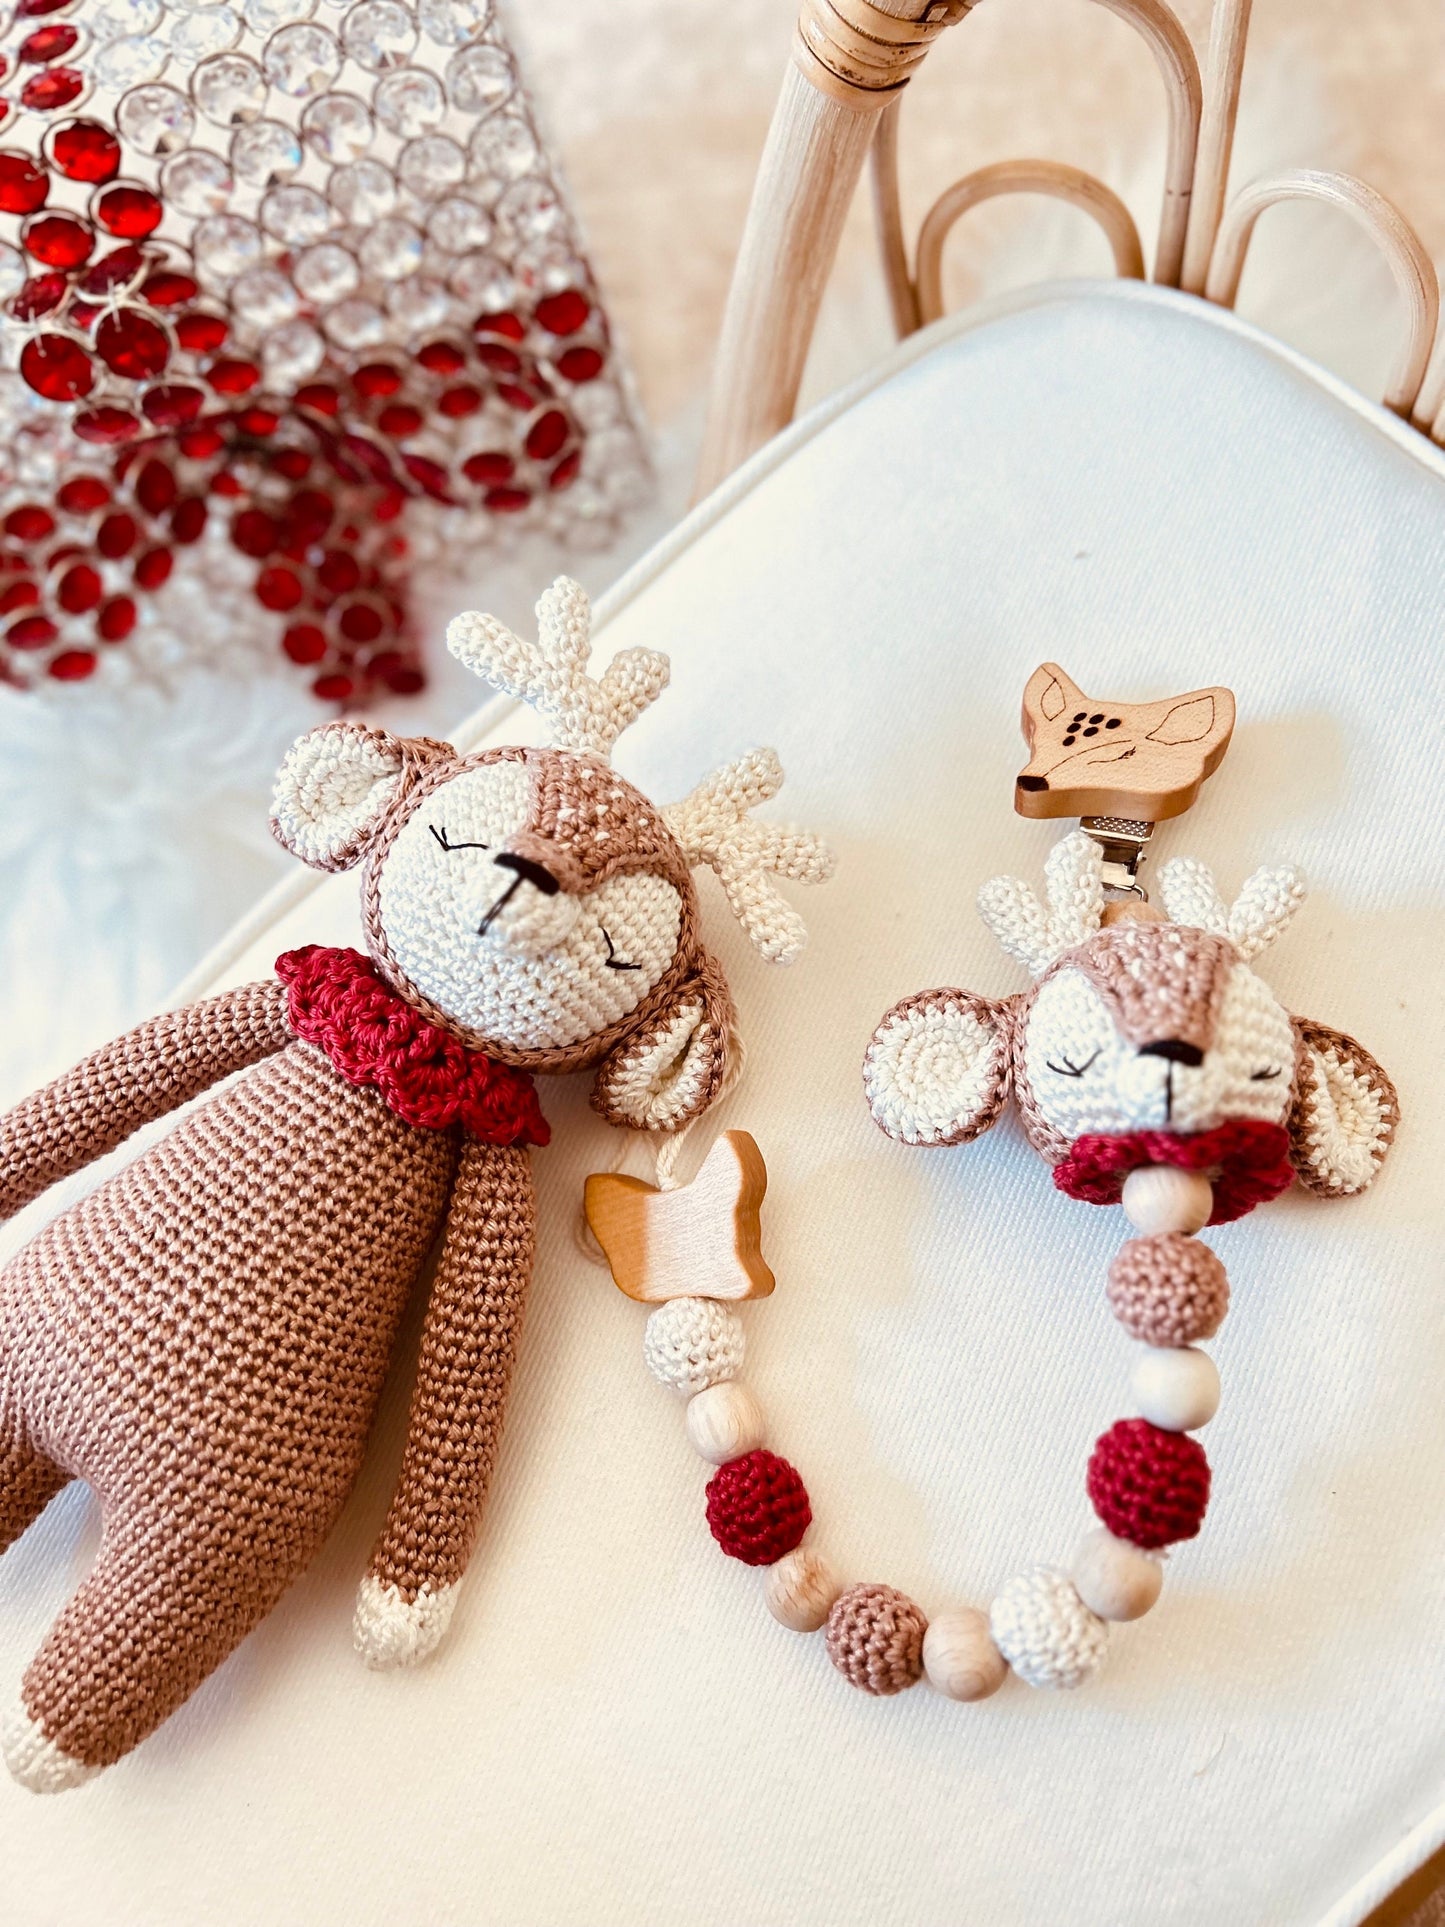 Christmas Crochet Deer, Stuffed Toy, Amigurumi Deer